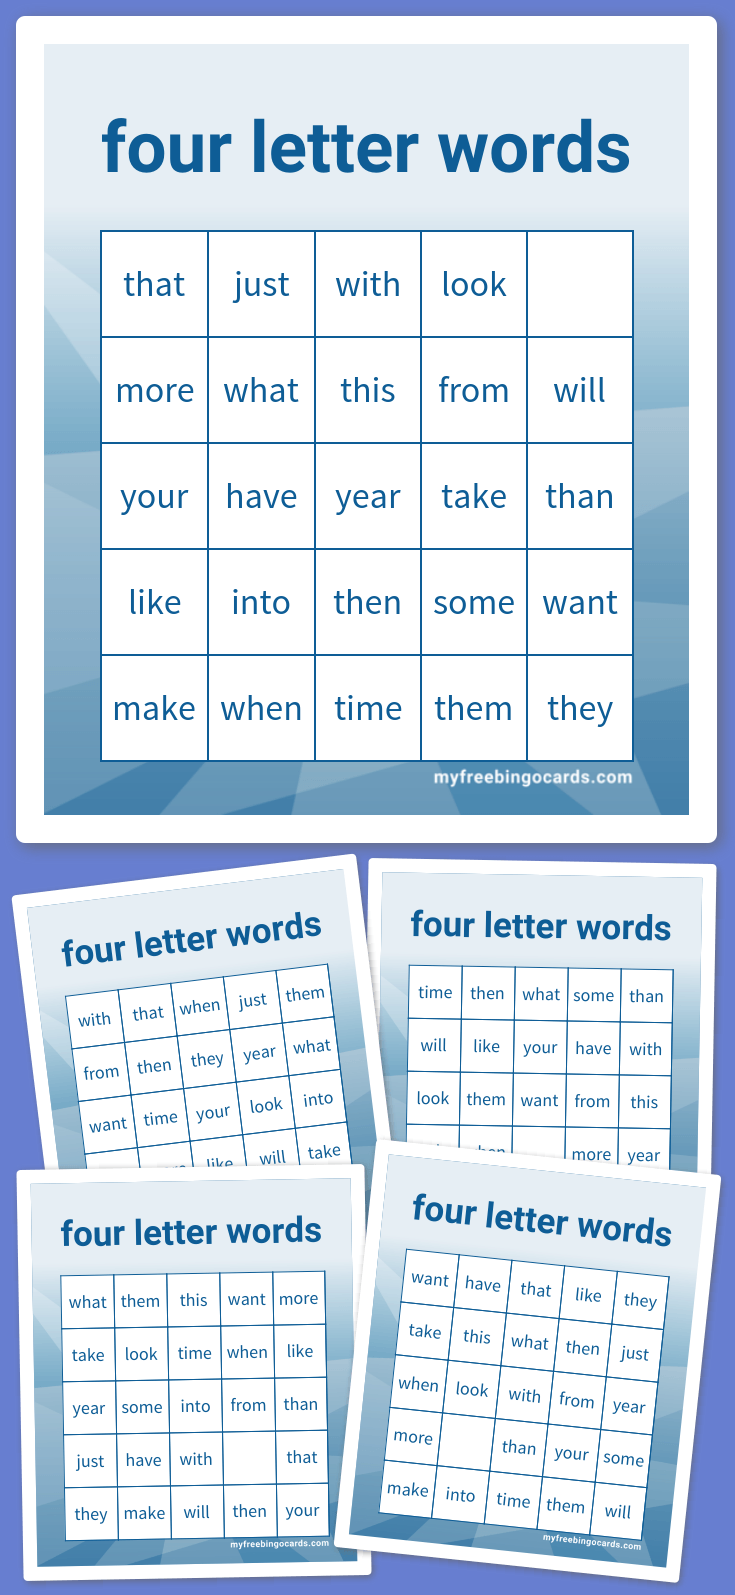 kids-four-letter-words-bingo